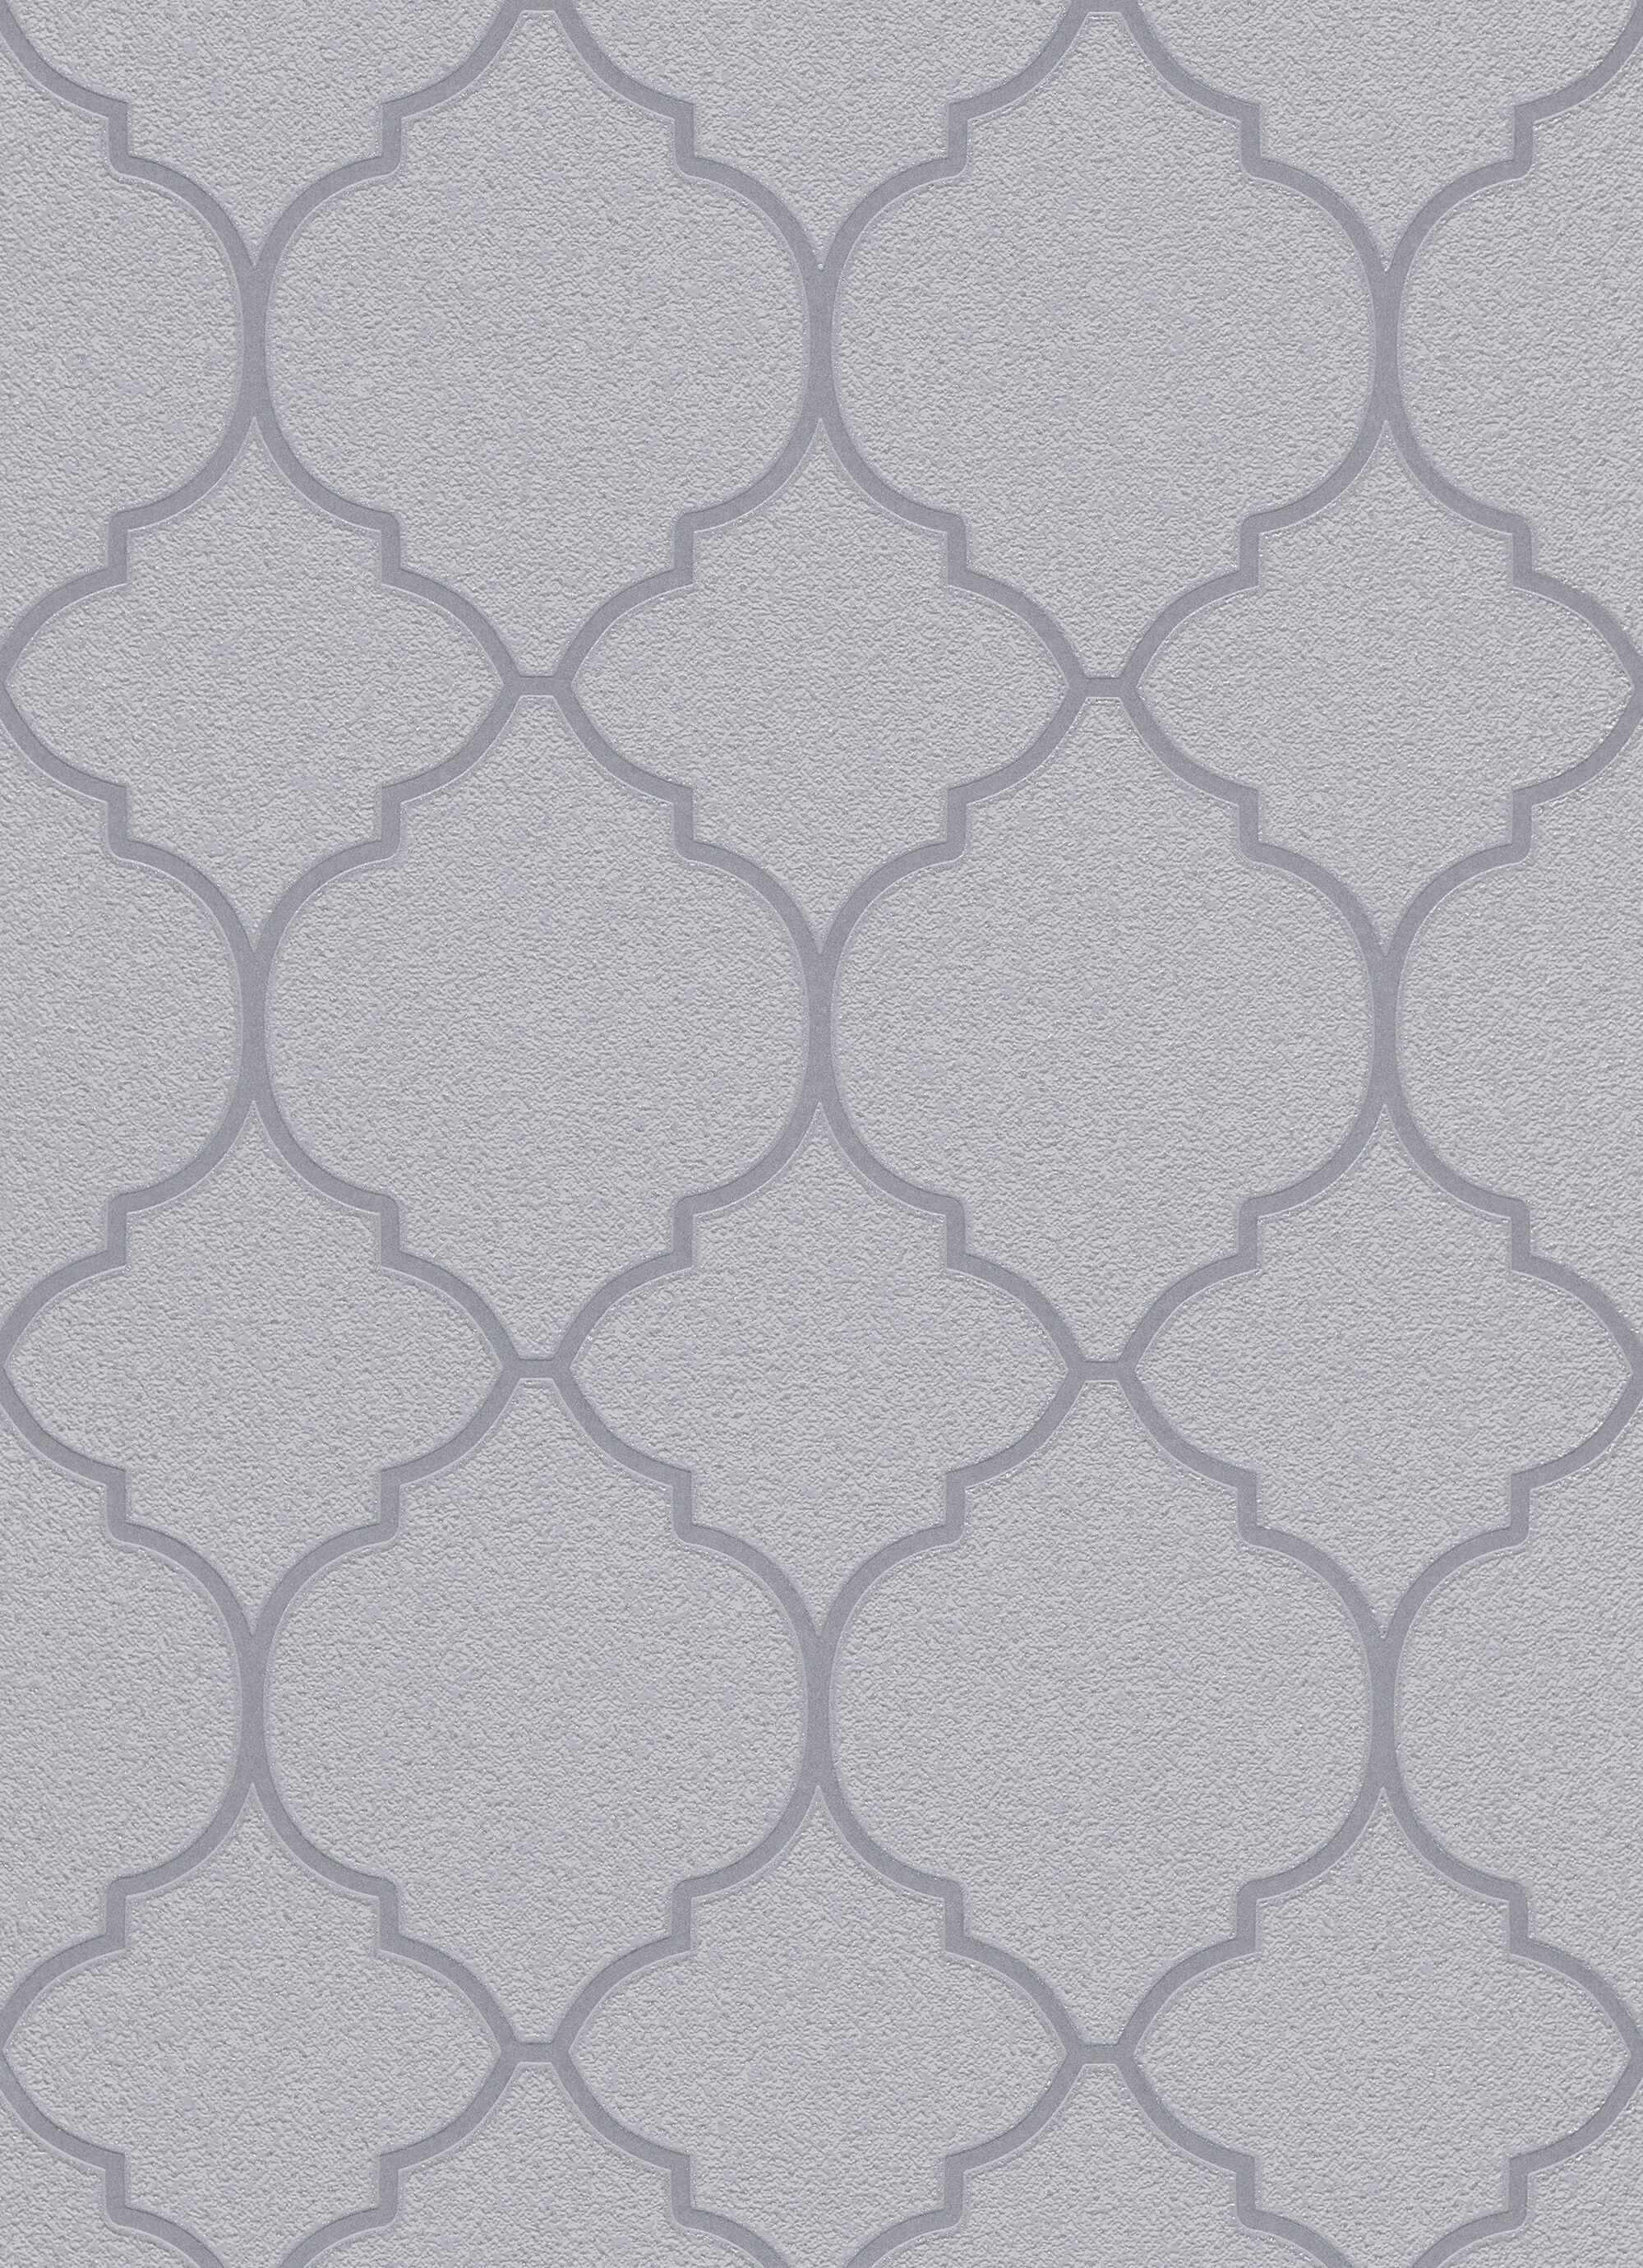 marble wallpaper,pattern,line,design,wallpaper,circle